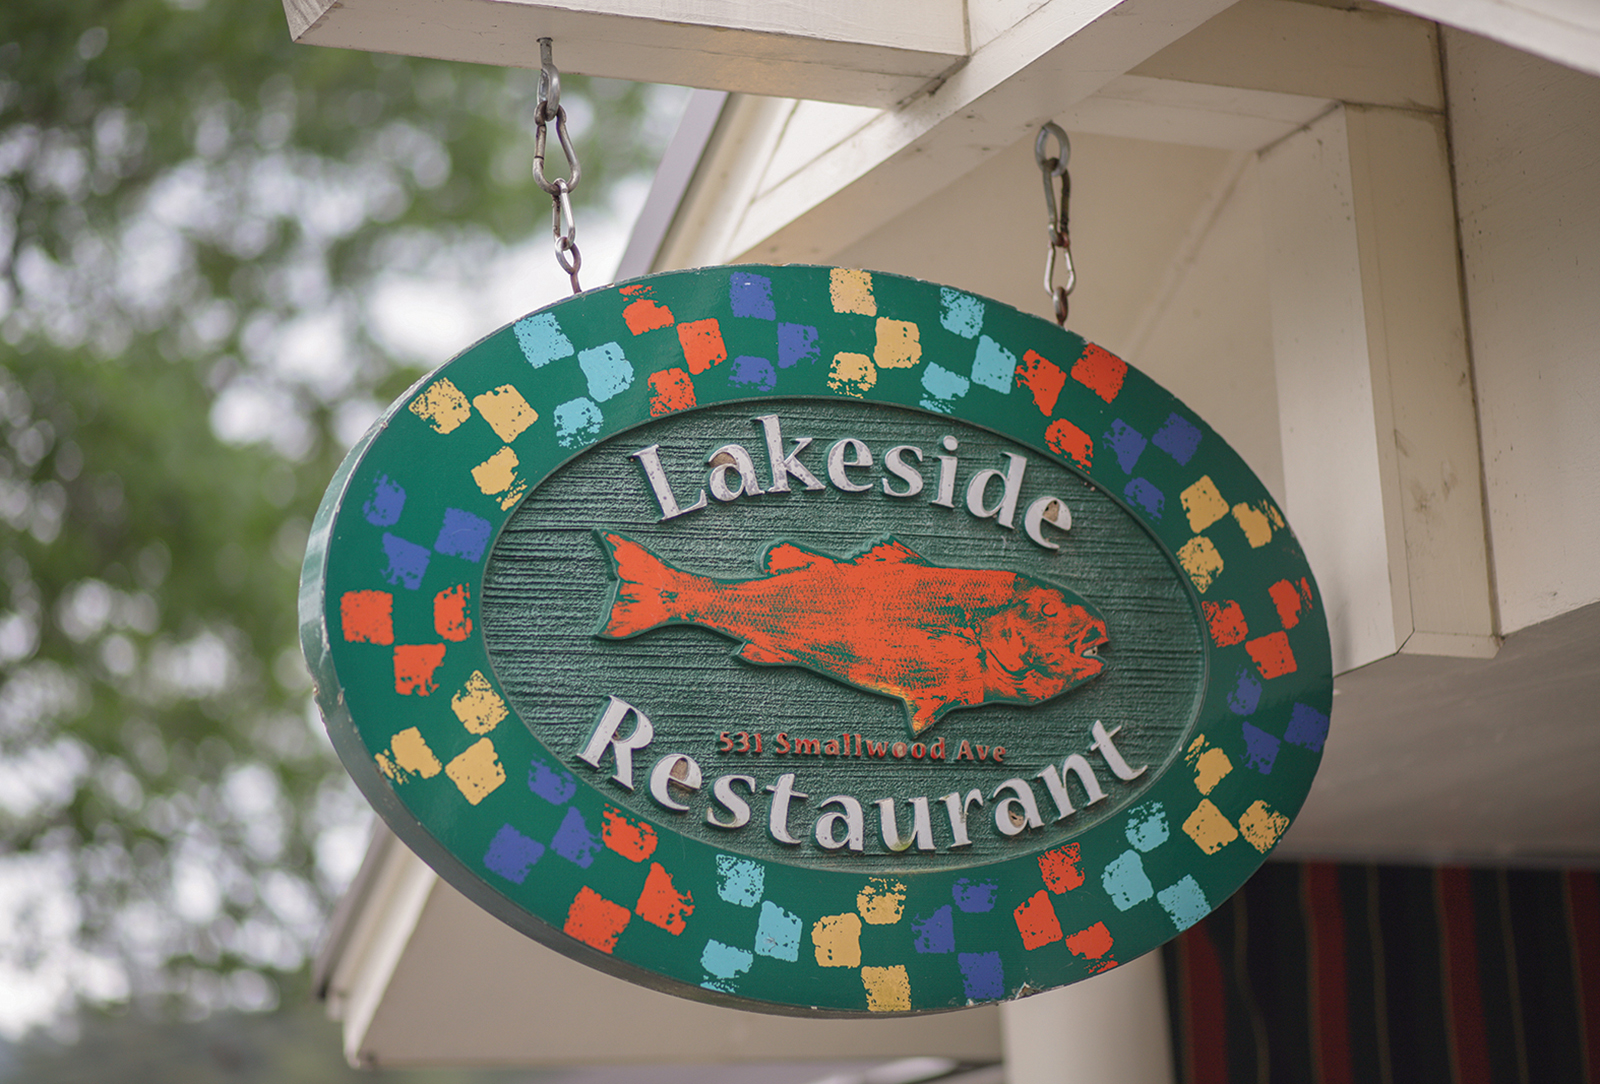 Lakeside Restaurant Highlands NC